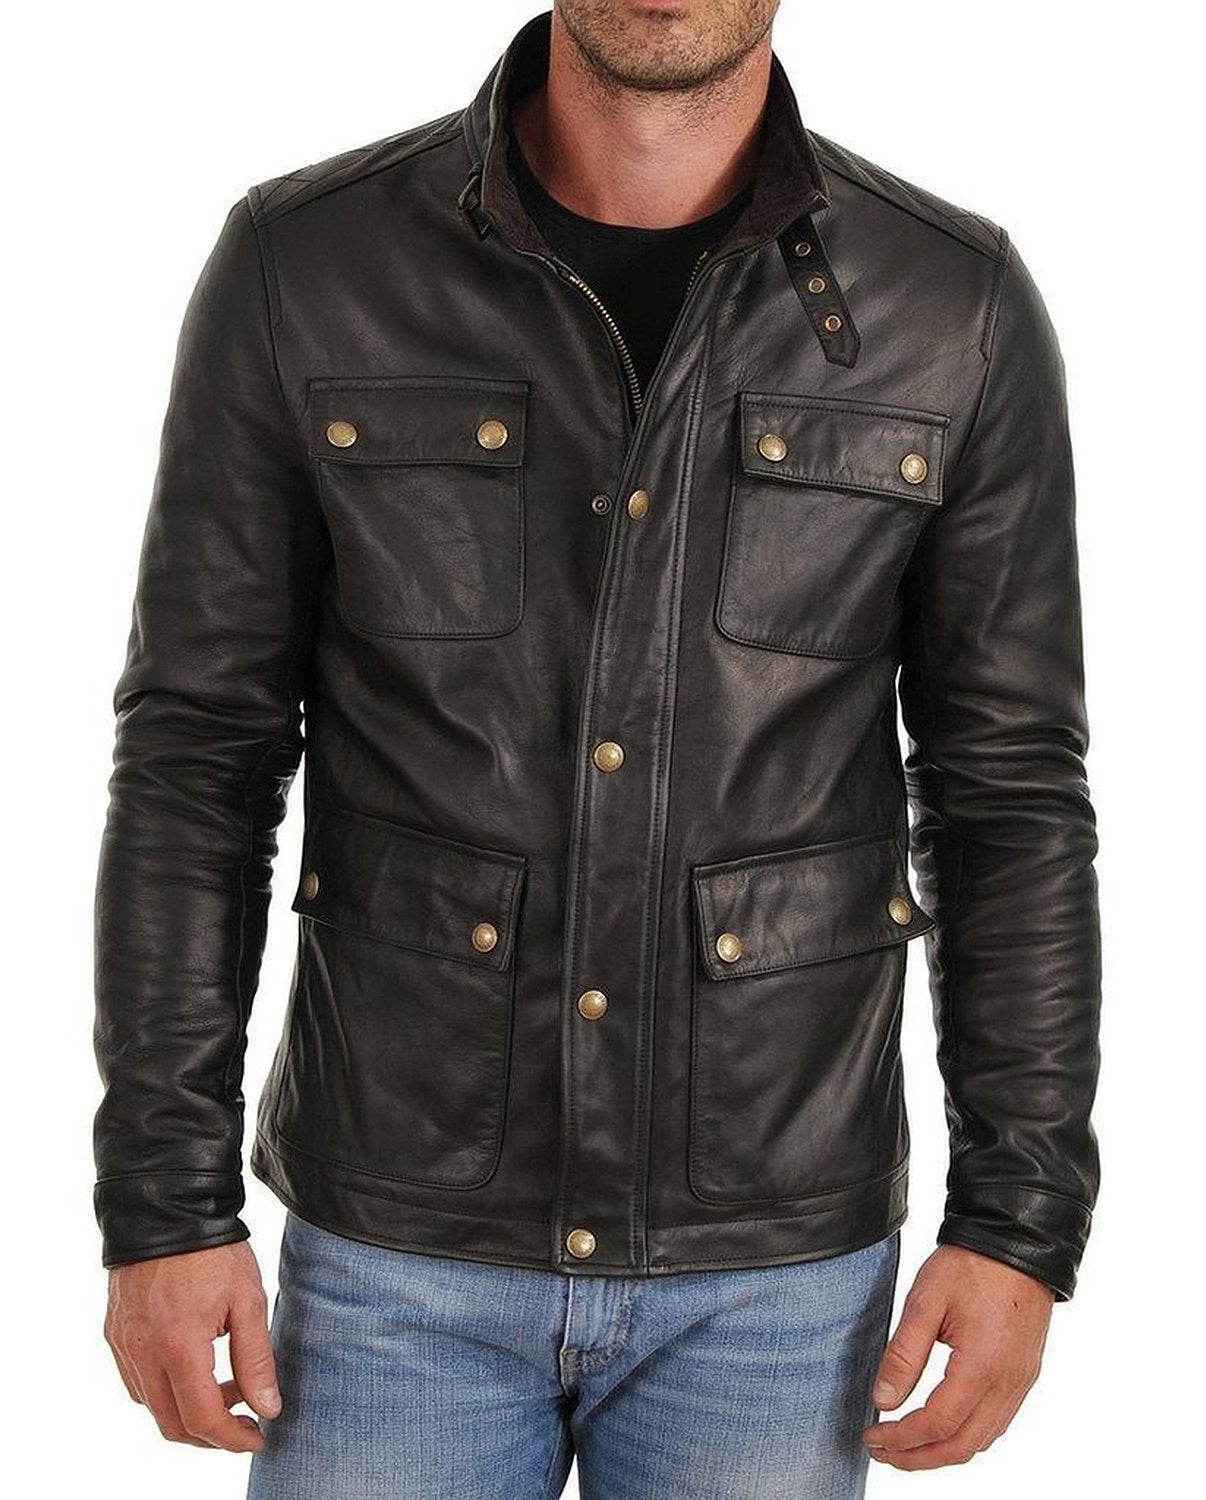 Leather Jackets Hub Mens Genuine Lambskin Leather Jacket (Black, Officer Jacket) - 1501024